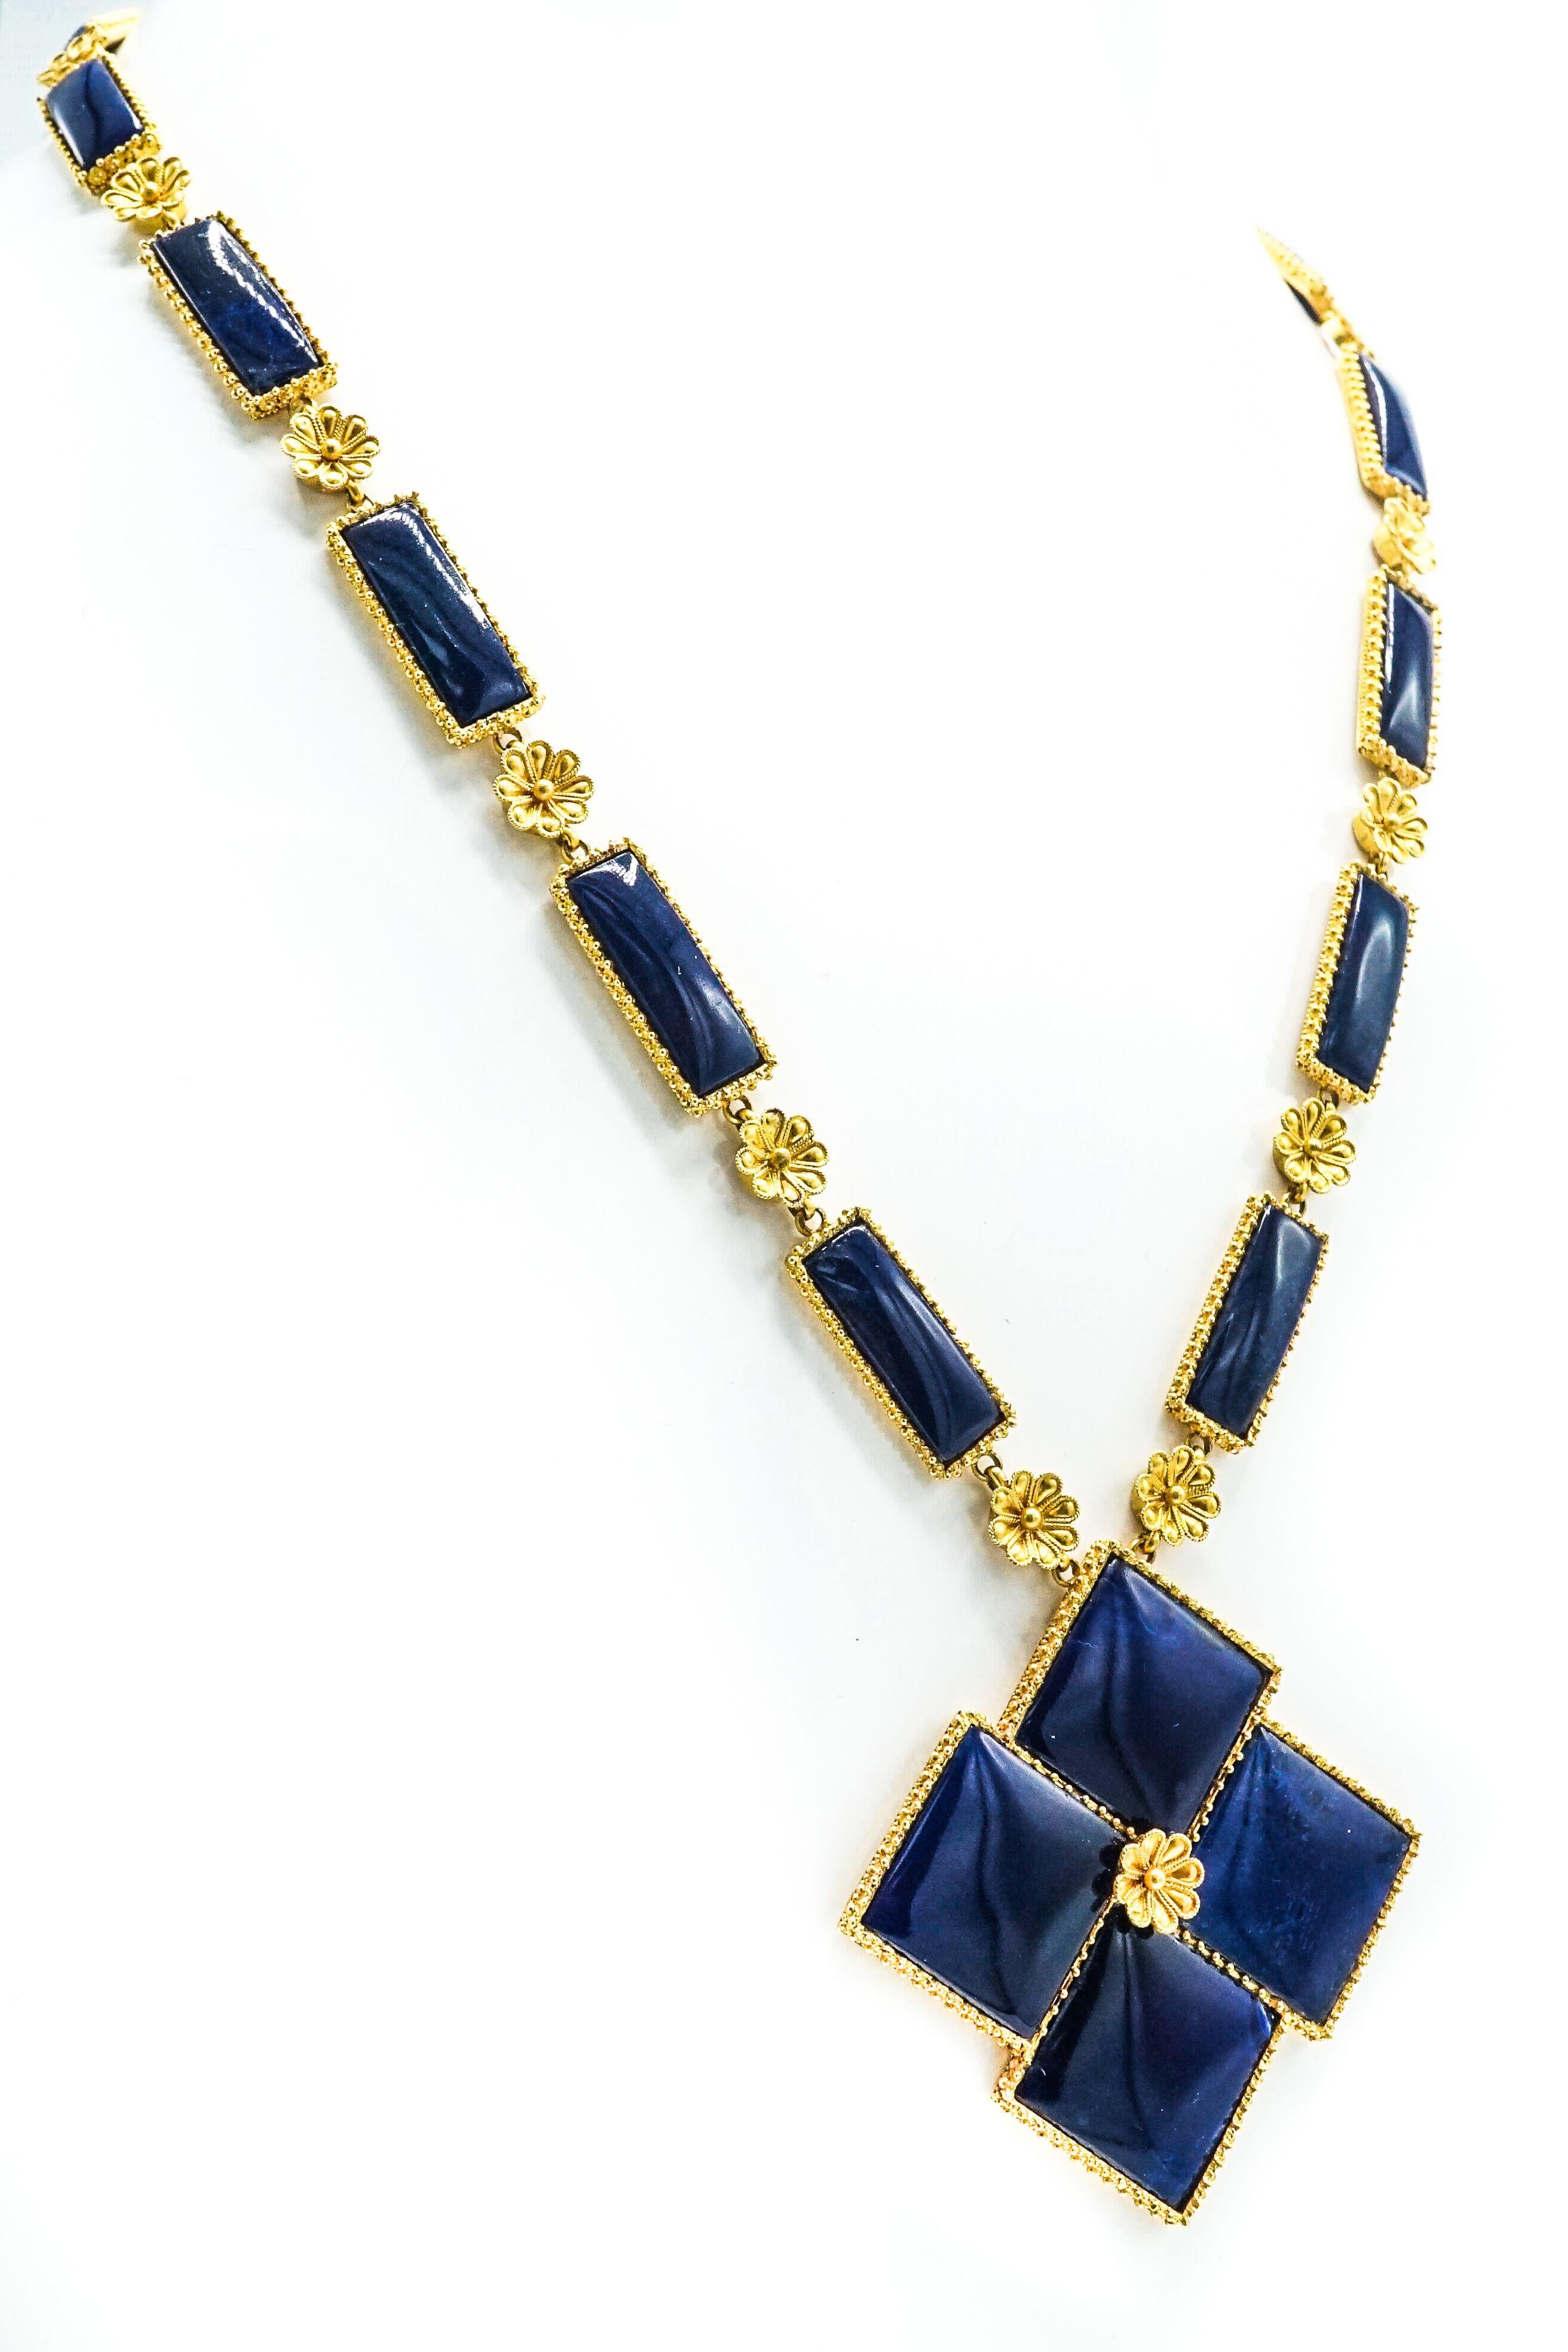 Llias Lalounis 22 Karat Gold and Sodalite Pendant-Necklace For Sale 3